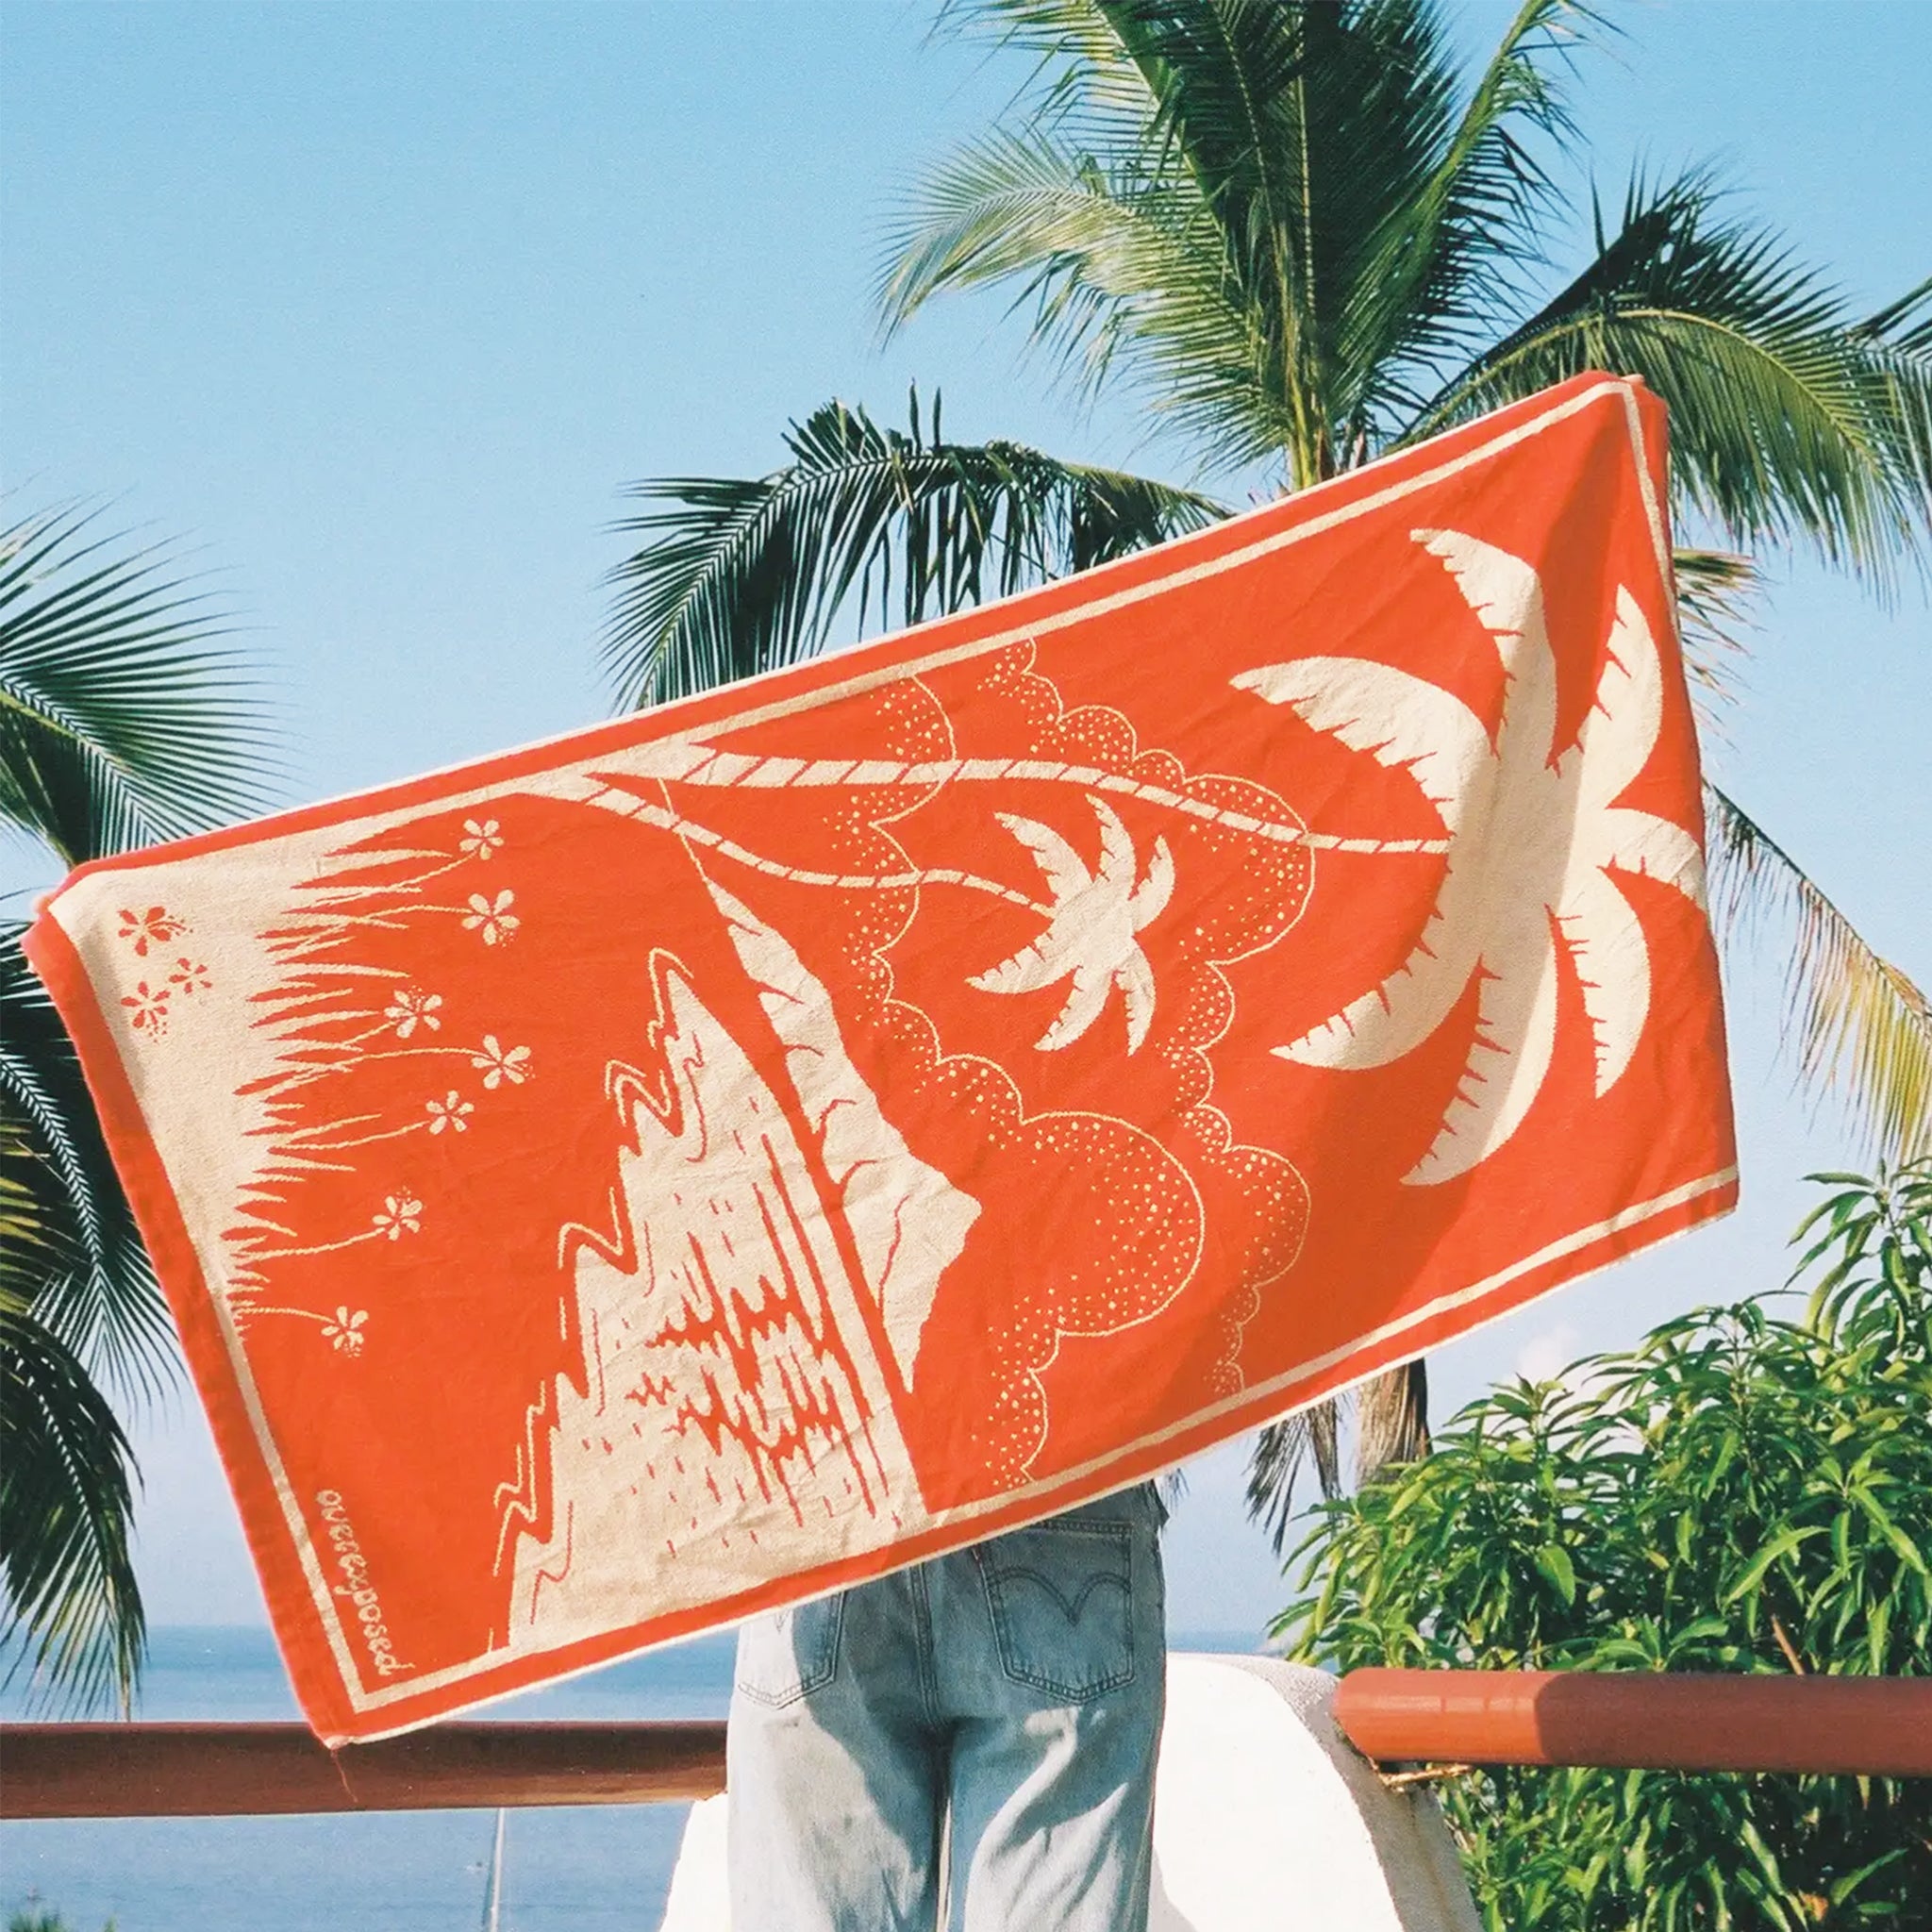 A beach towel with a palm tree design.